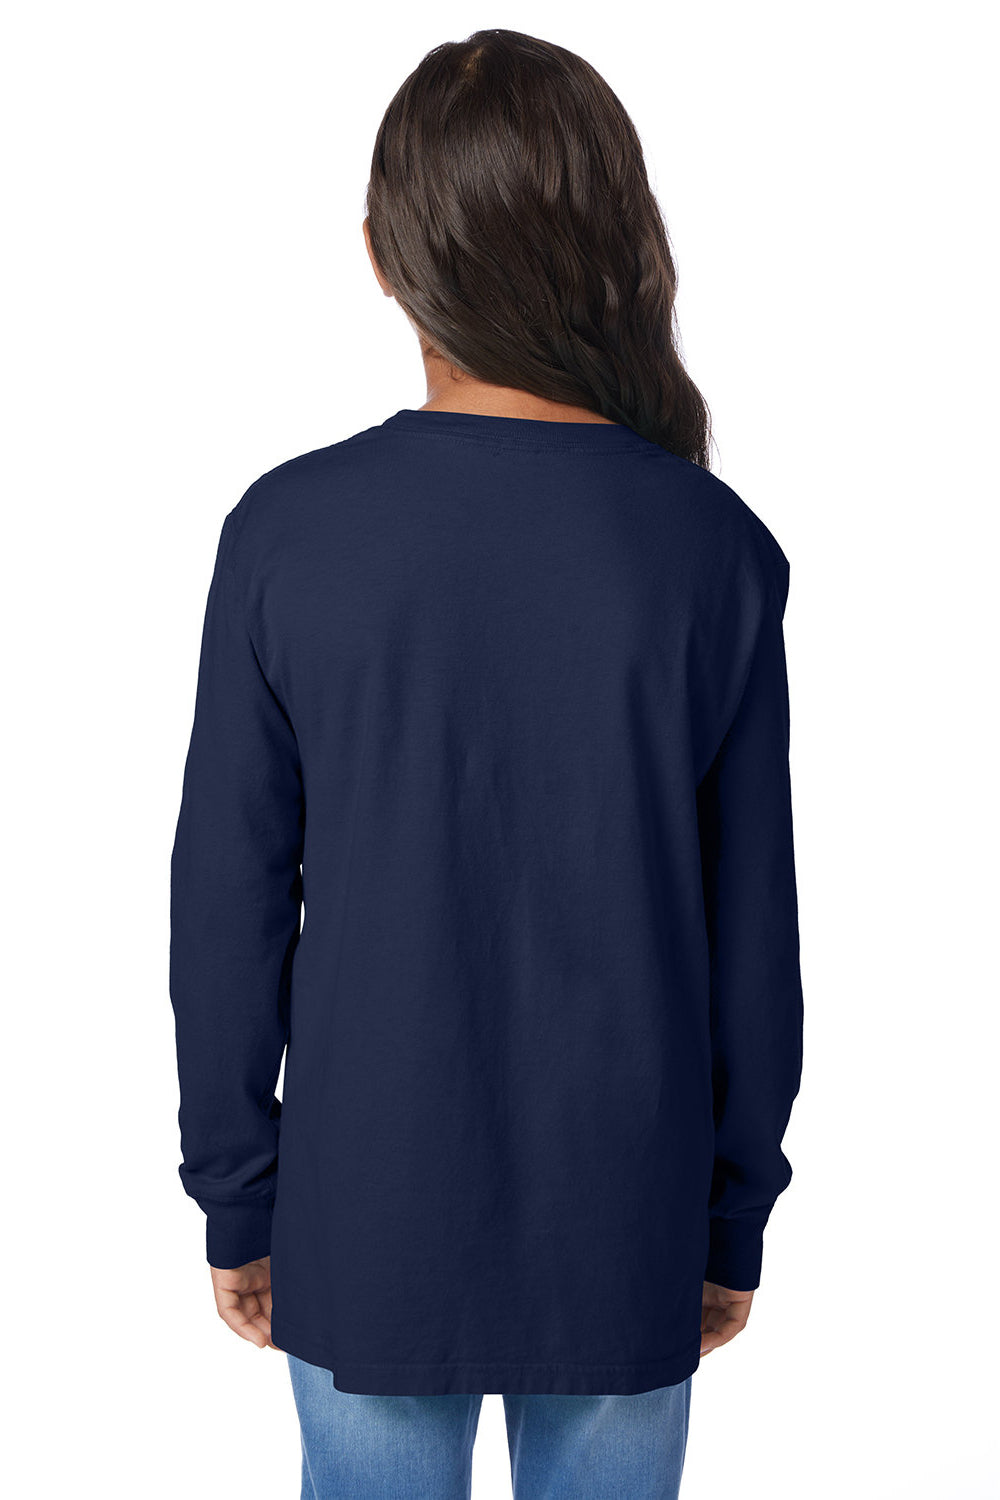 ComfortWash By Hanes GDH275 Youth Garment Dyed Long Sleeve Crewneck T-Shirt Navy Blue Model Back